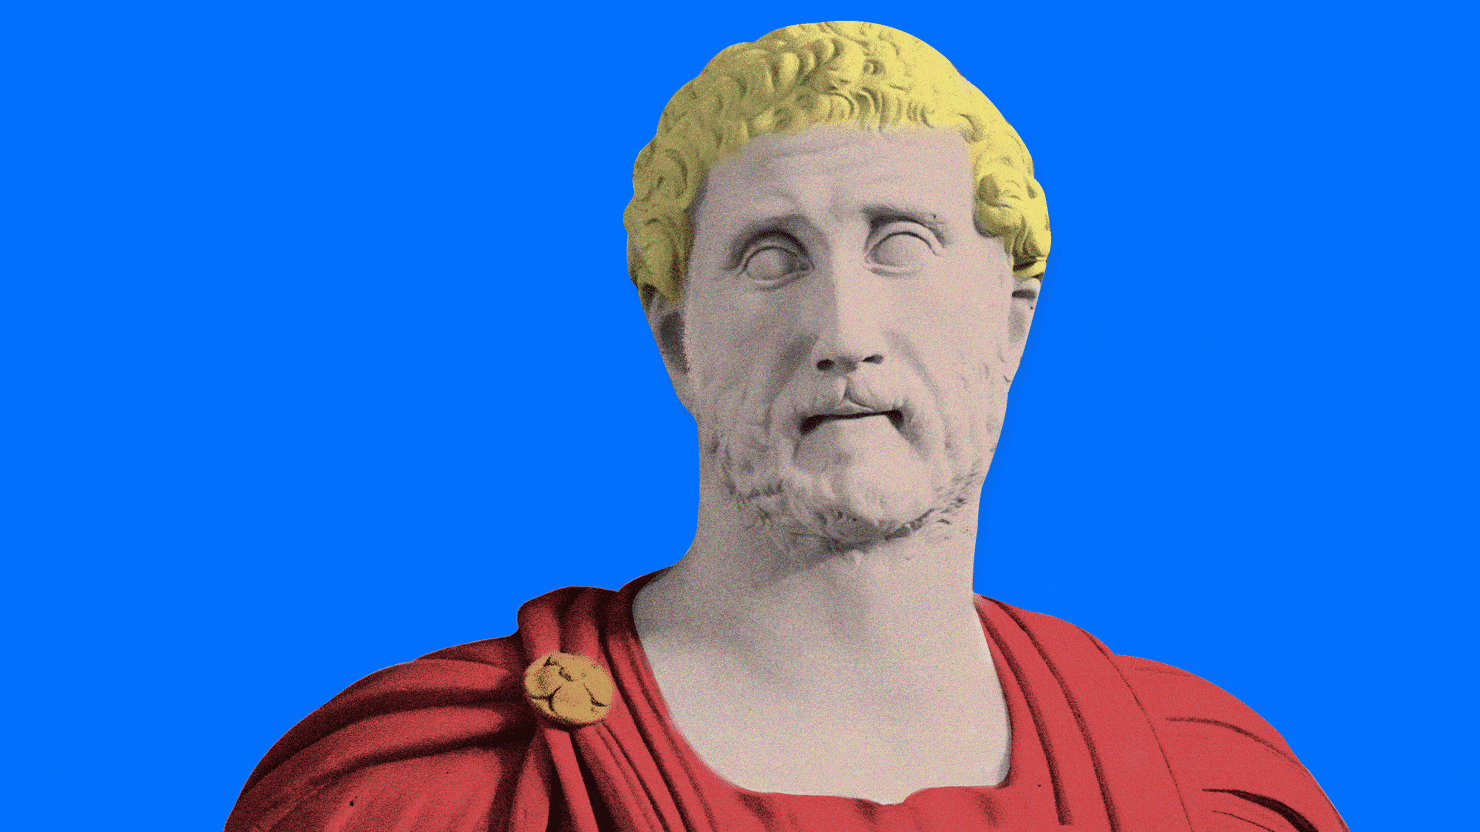 Trump Is No King, He's a Roman Emperor, According to ...